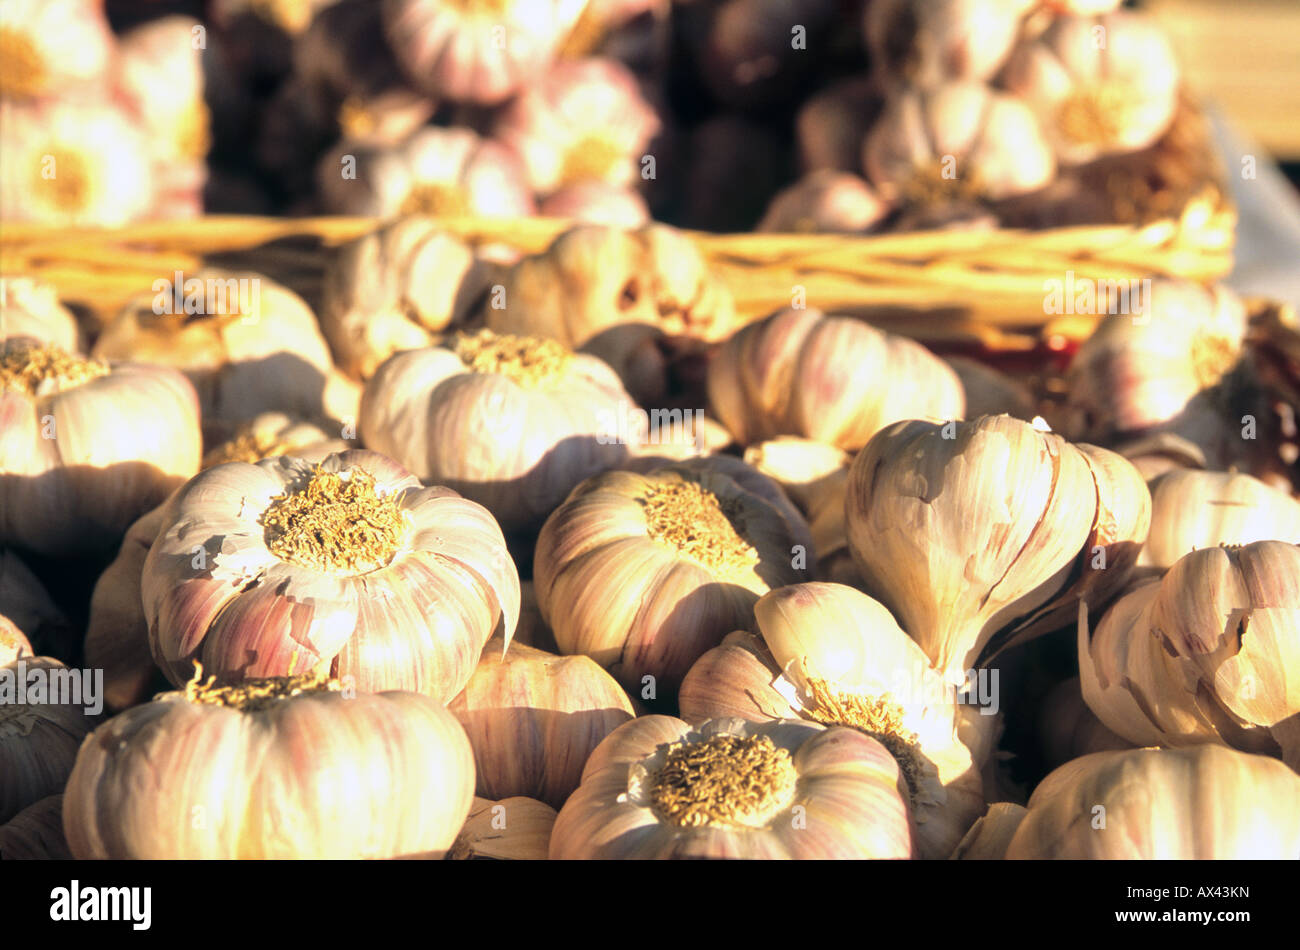 Garlic Provence market Stock Photo